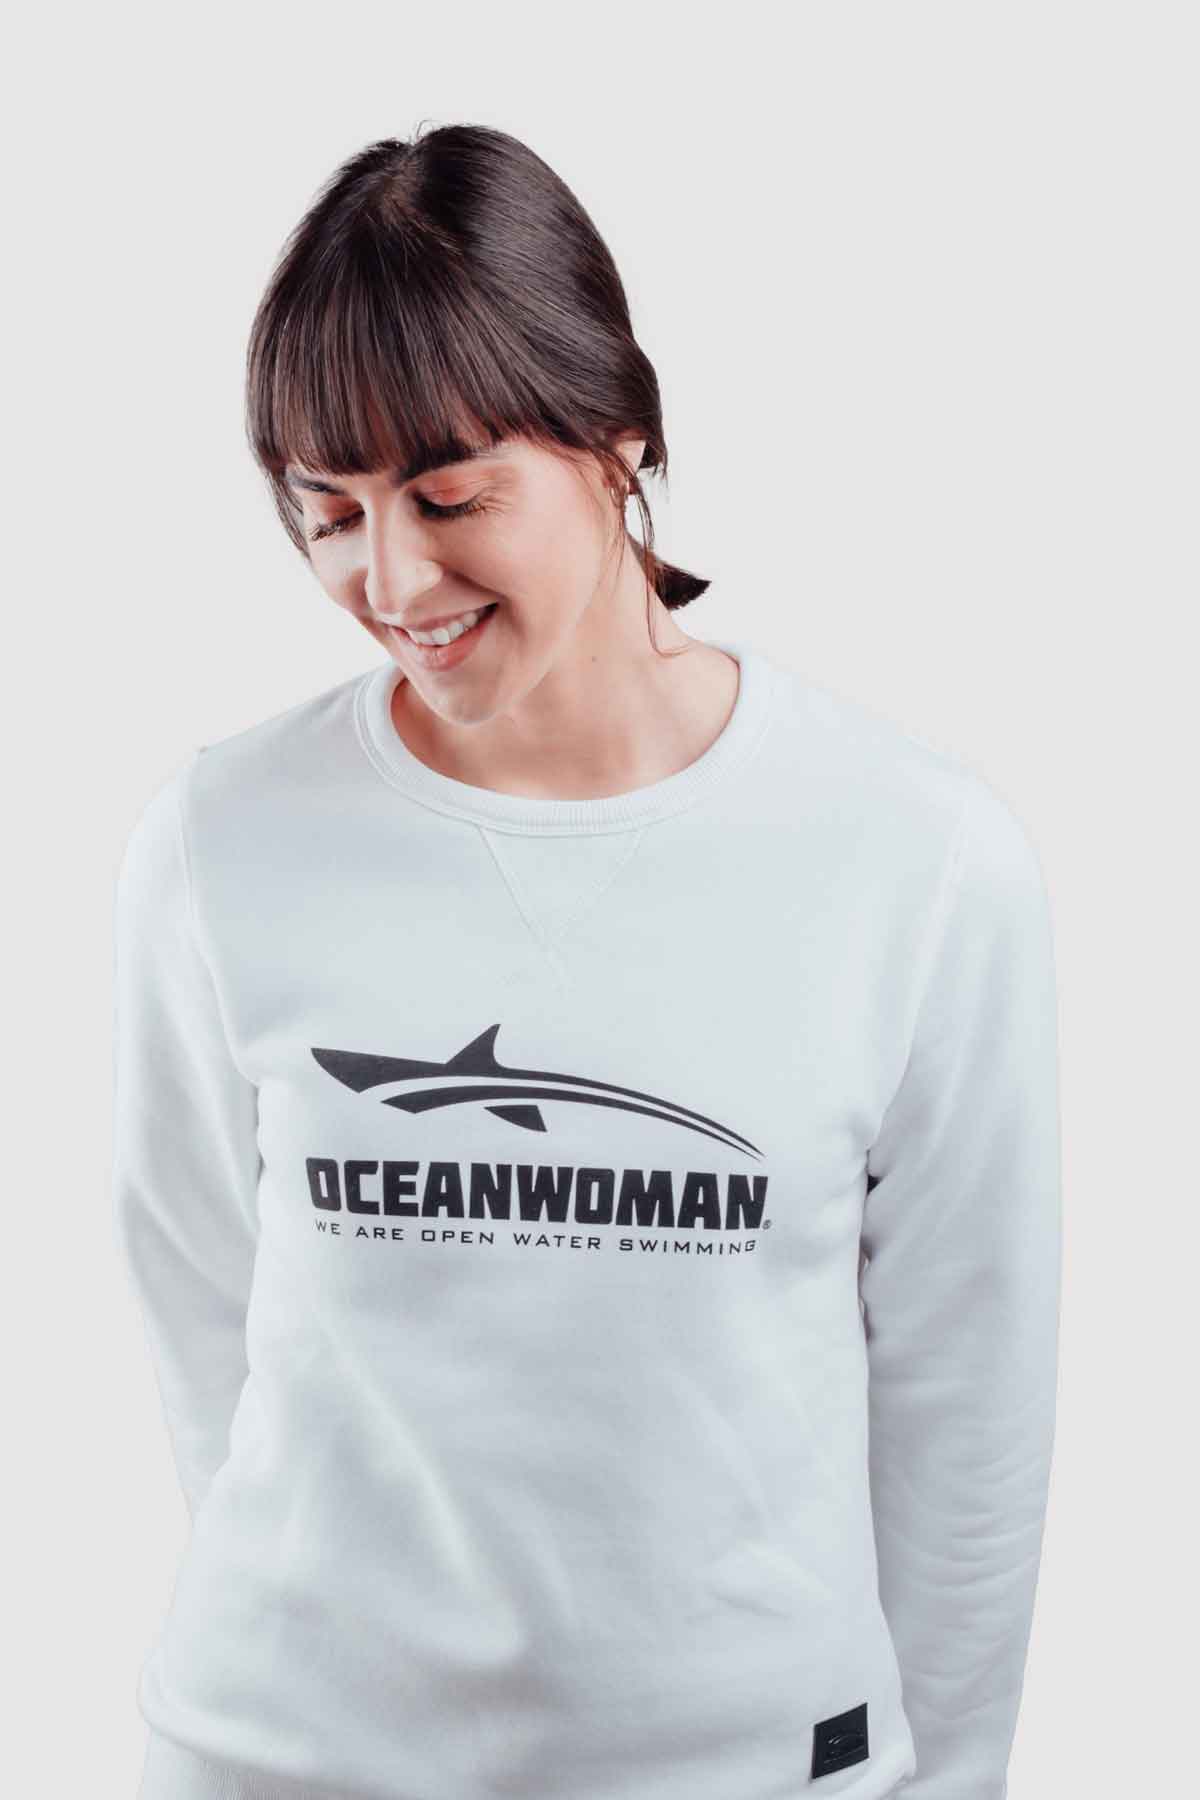 Oceanwoman icon white sweater women